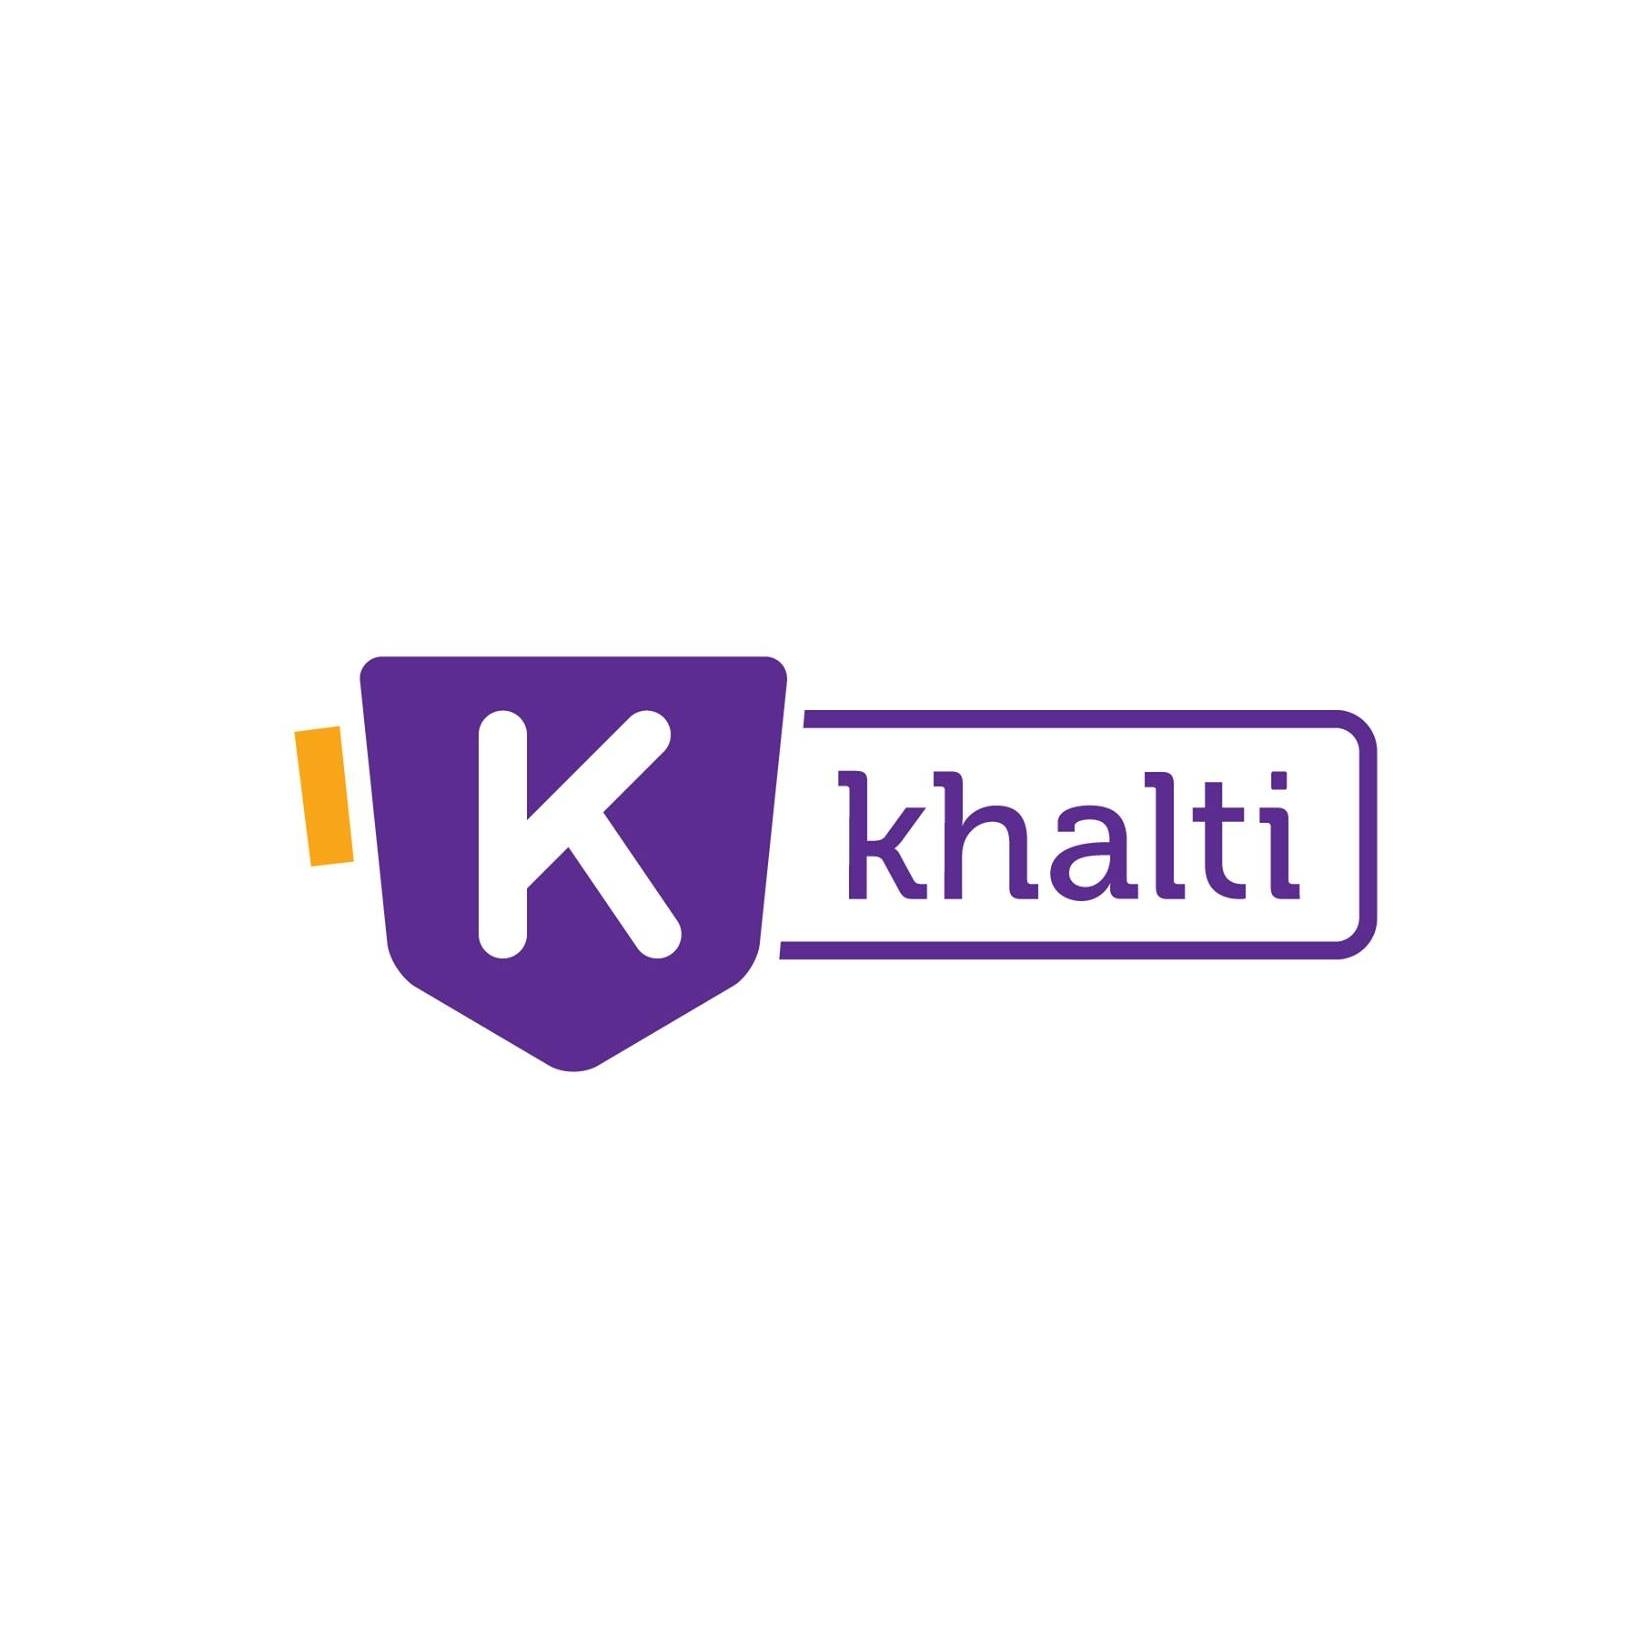 Khalti - Digital Wallet and Payment Gateway